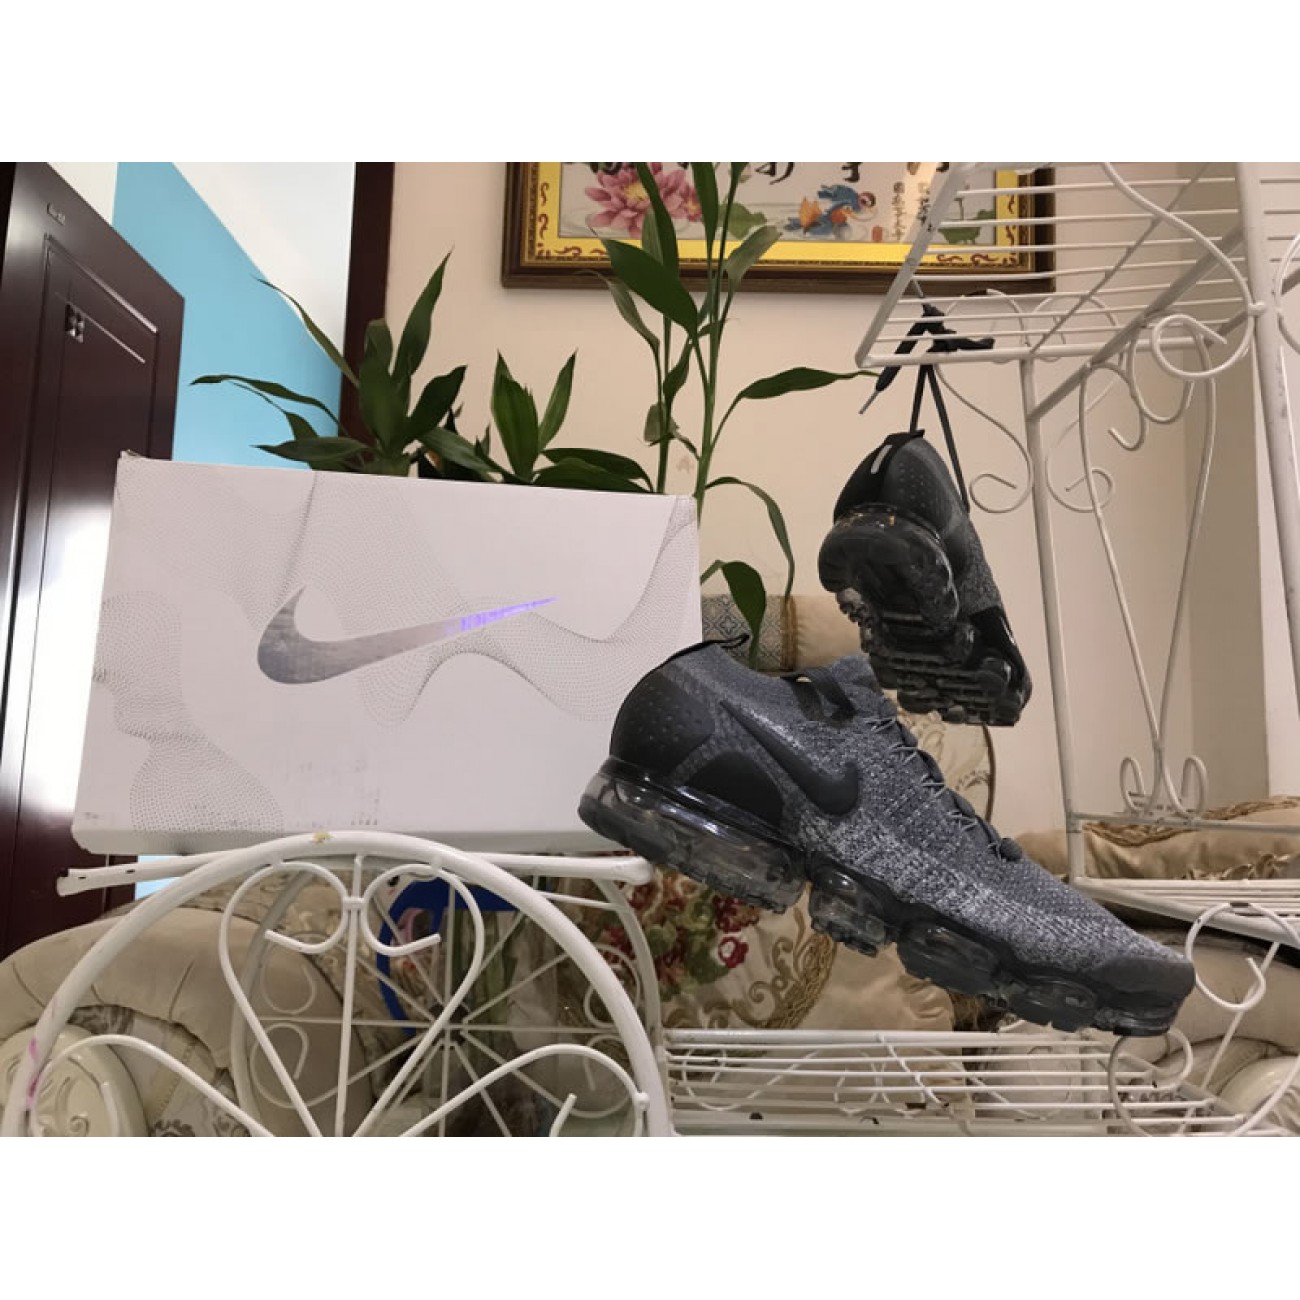 Nike Air VaporMax Flyknit 2.0 Dark Wolf Grey 2018 942842-002